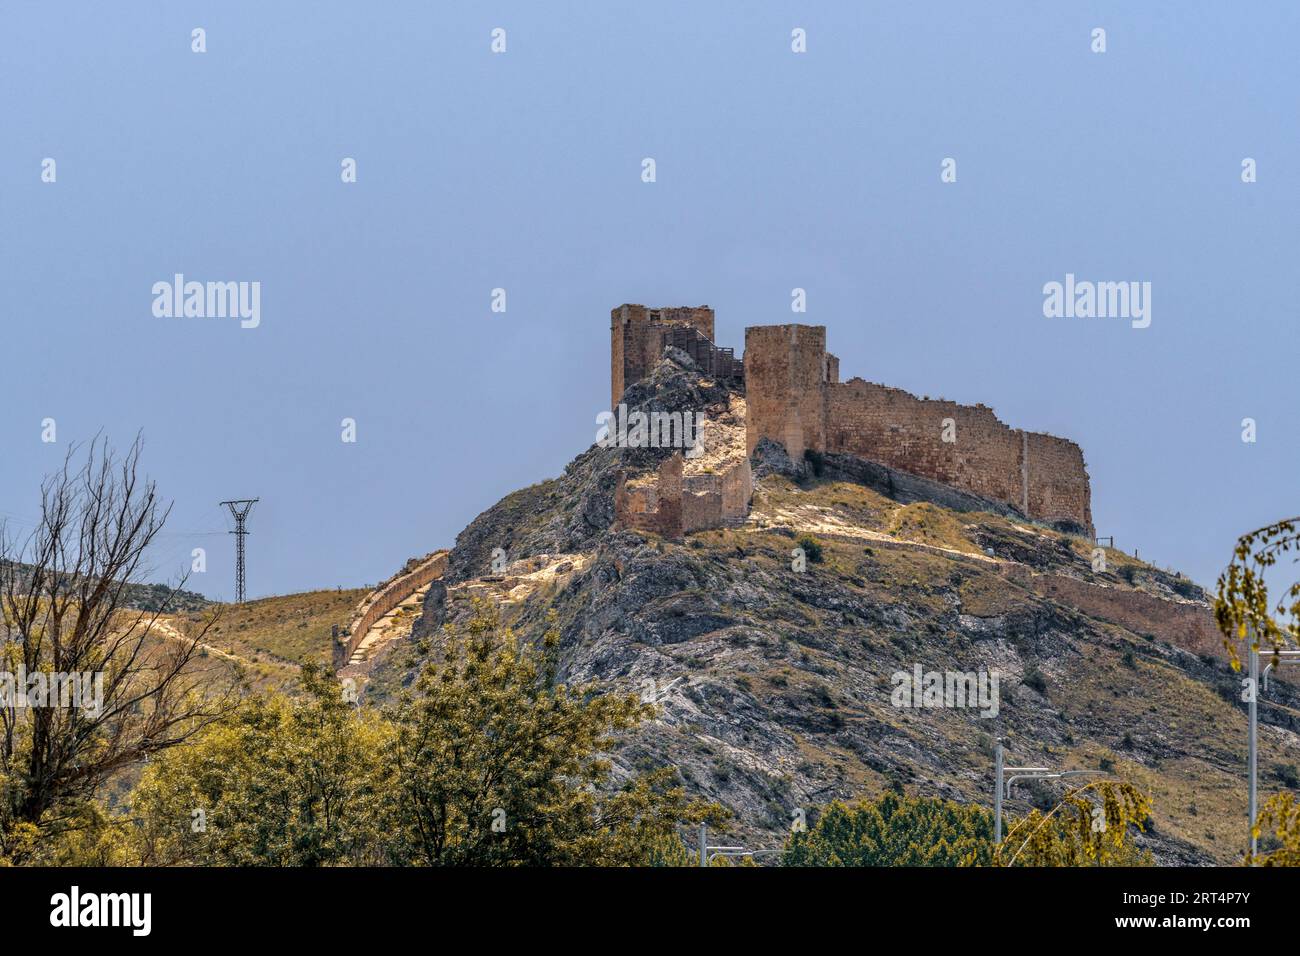 ruined remains of the castle of El Burgo de Osma-Ciudad de Osma, municipality of the province of Soria, autonomous community of Castilla y León, Spain Stock Photo